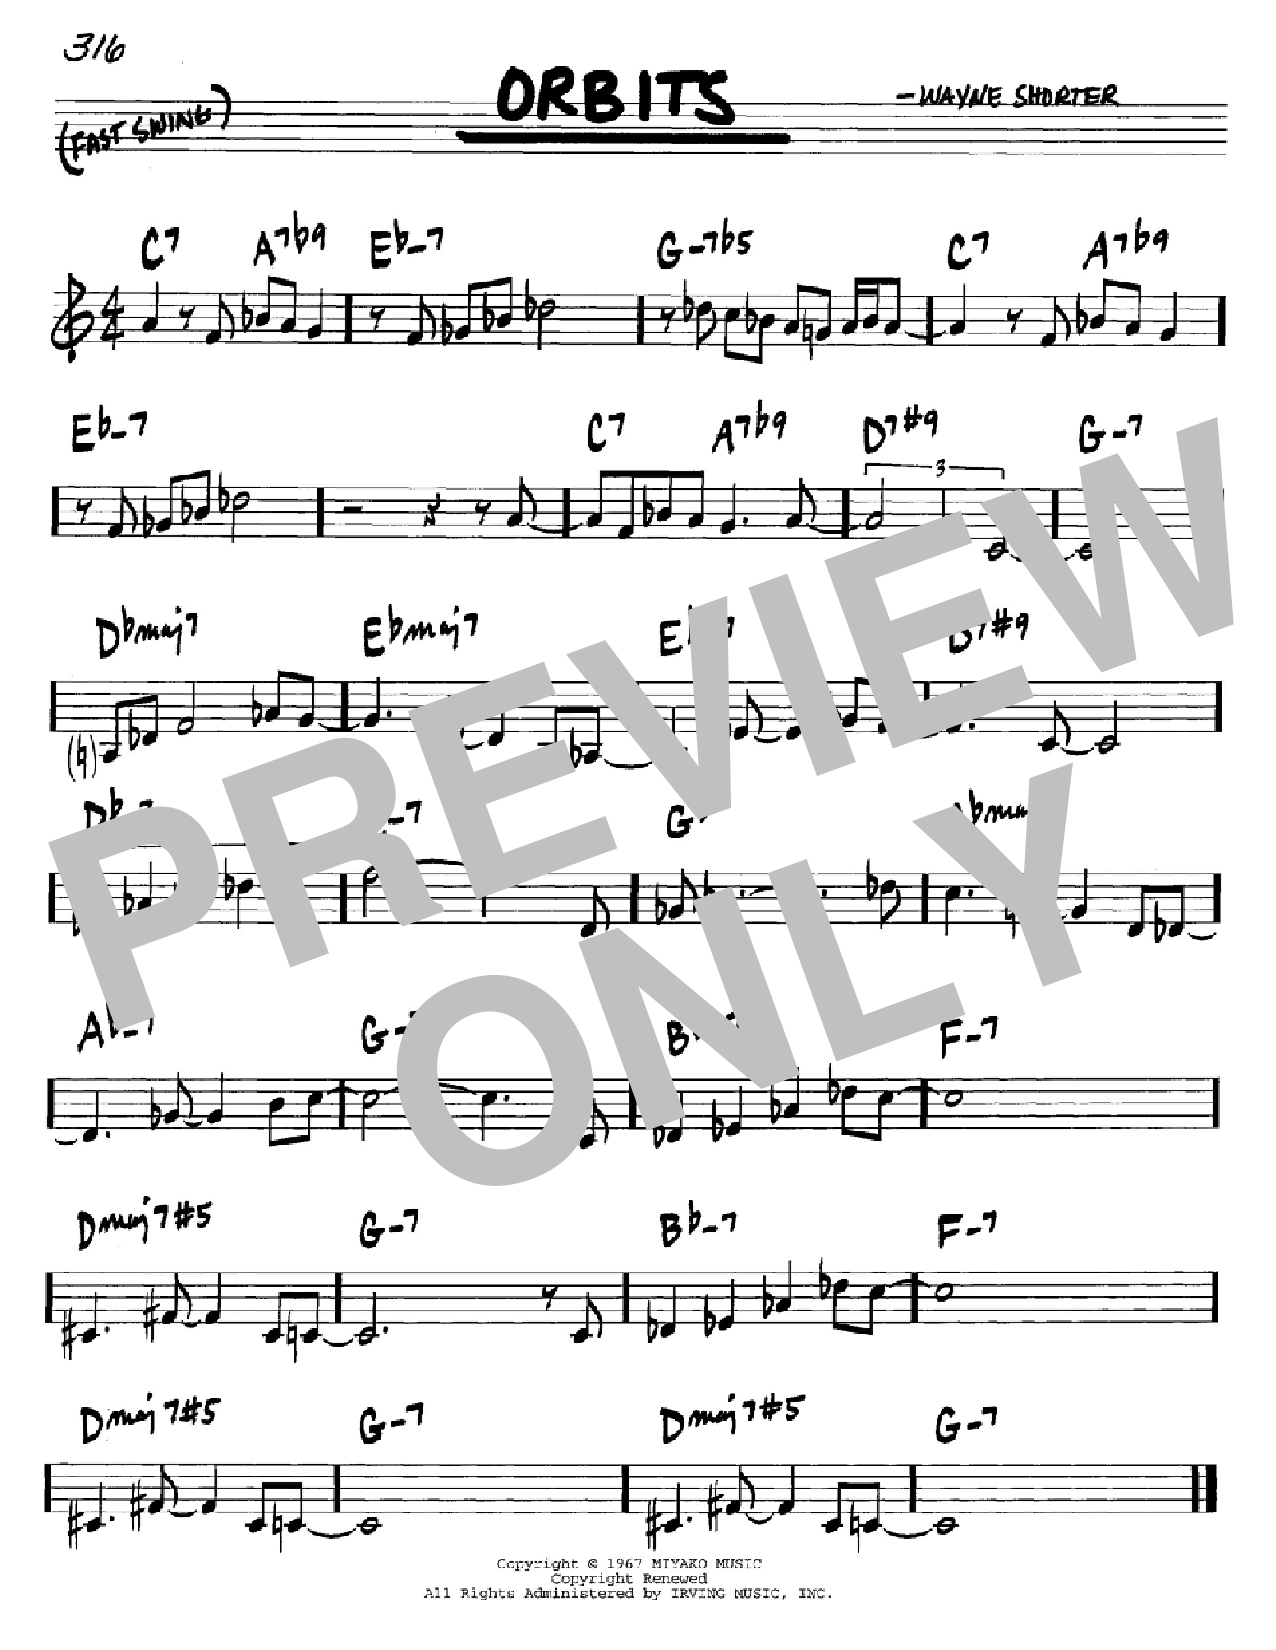 Wayne Shorter Orbits Sheet Music Notes & Chords for Real Book - Melody & Chords - Eb Instruments - Download or Print PDF